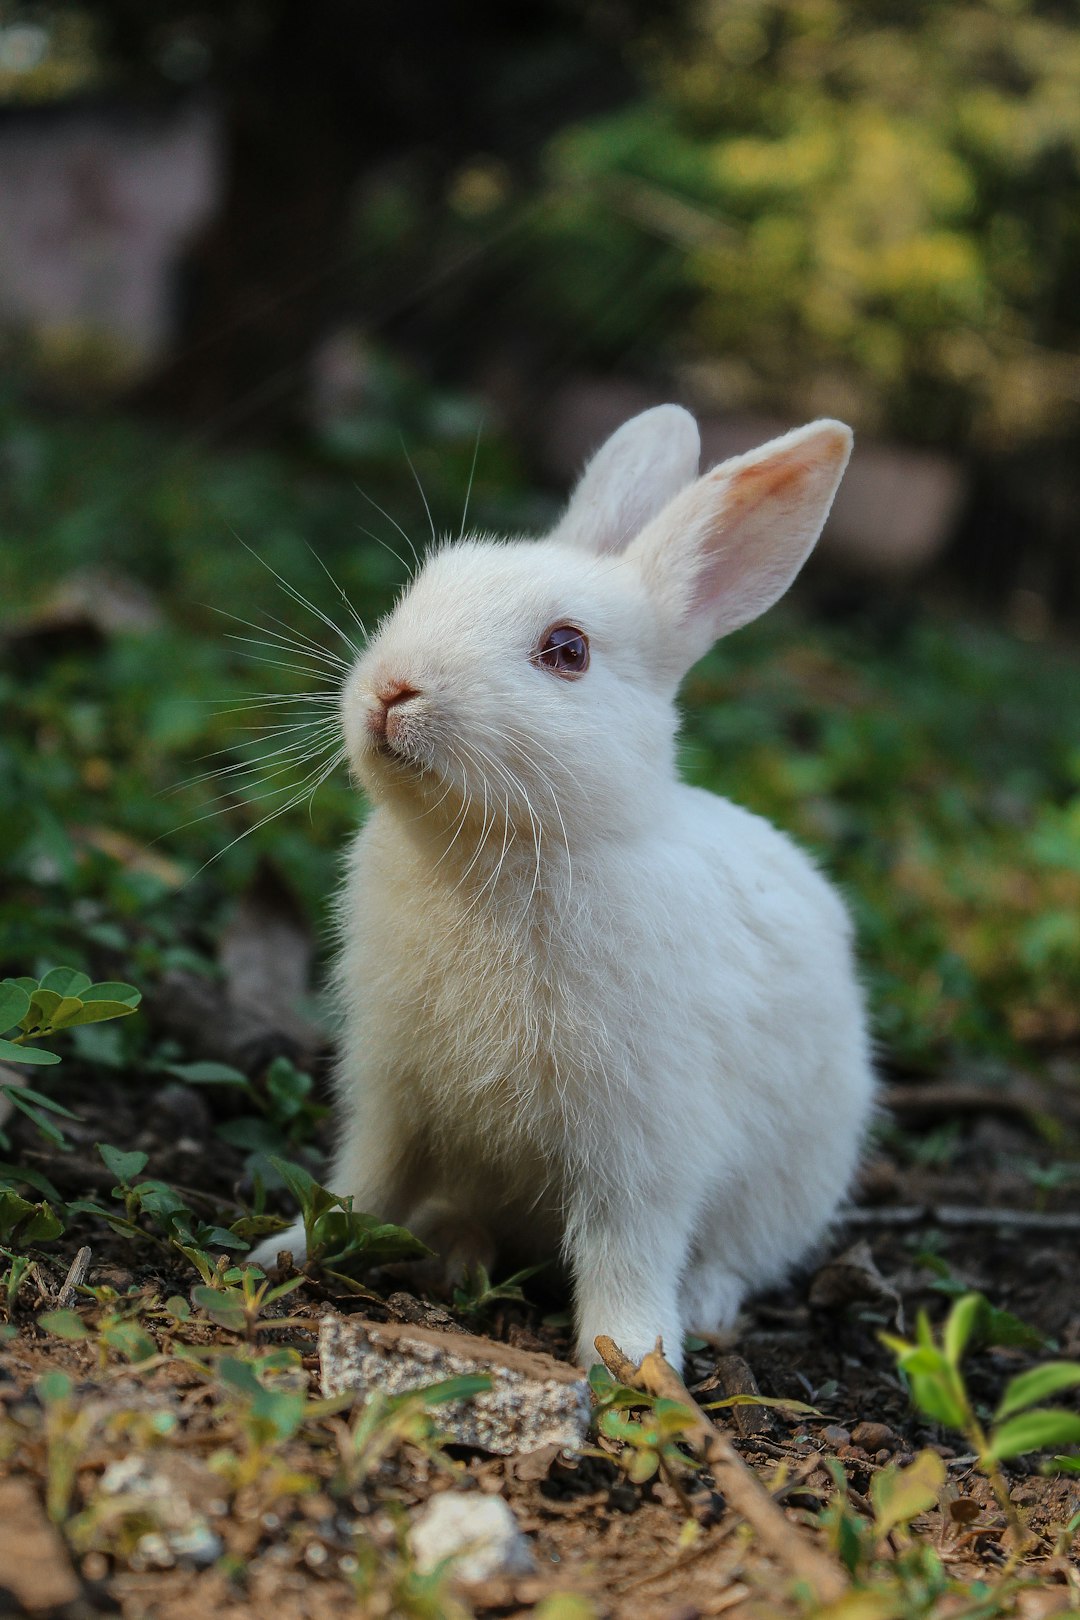 Rabbit pictures - YouTube